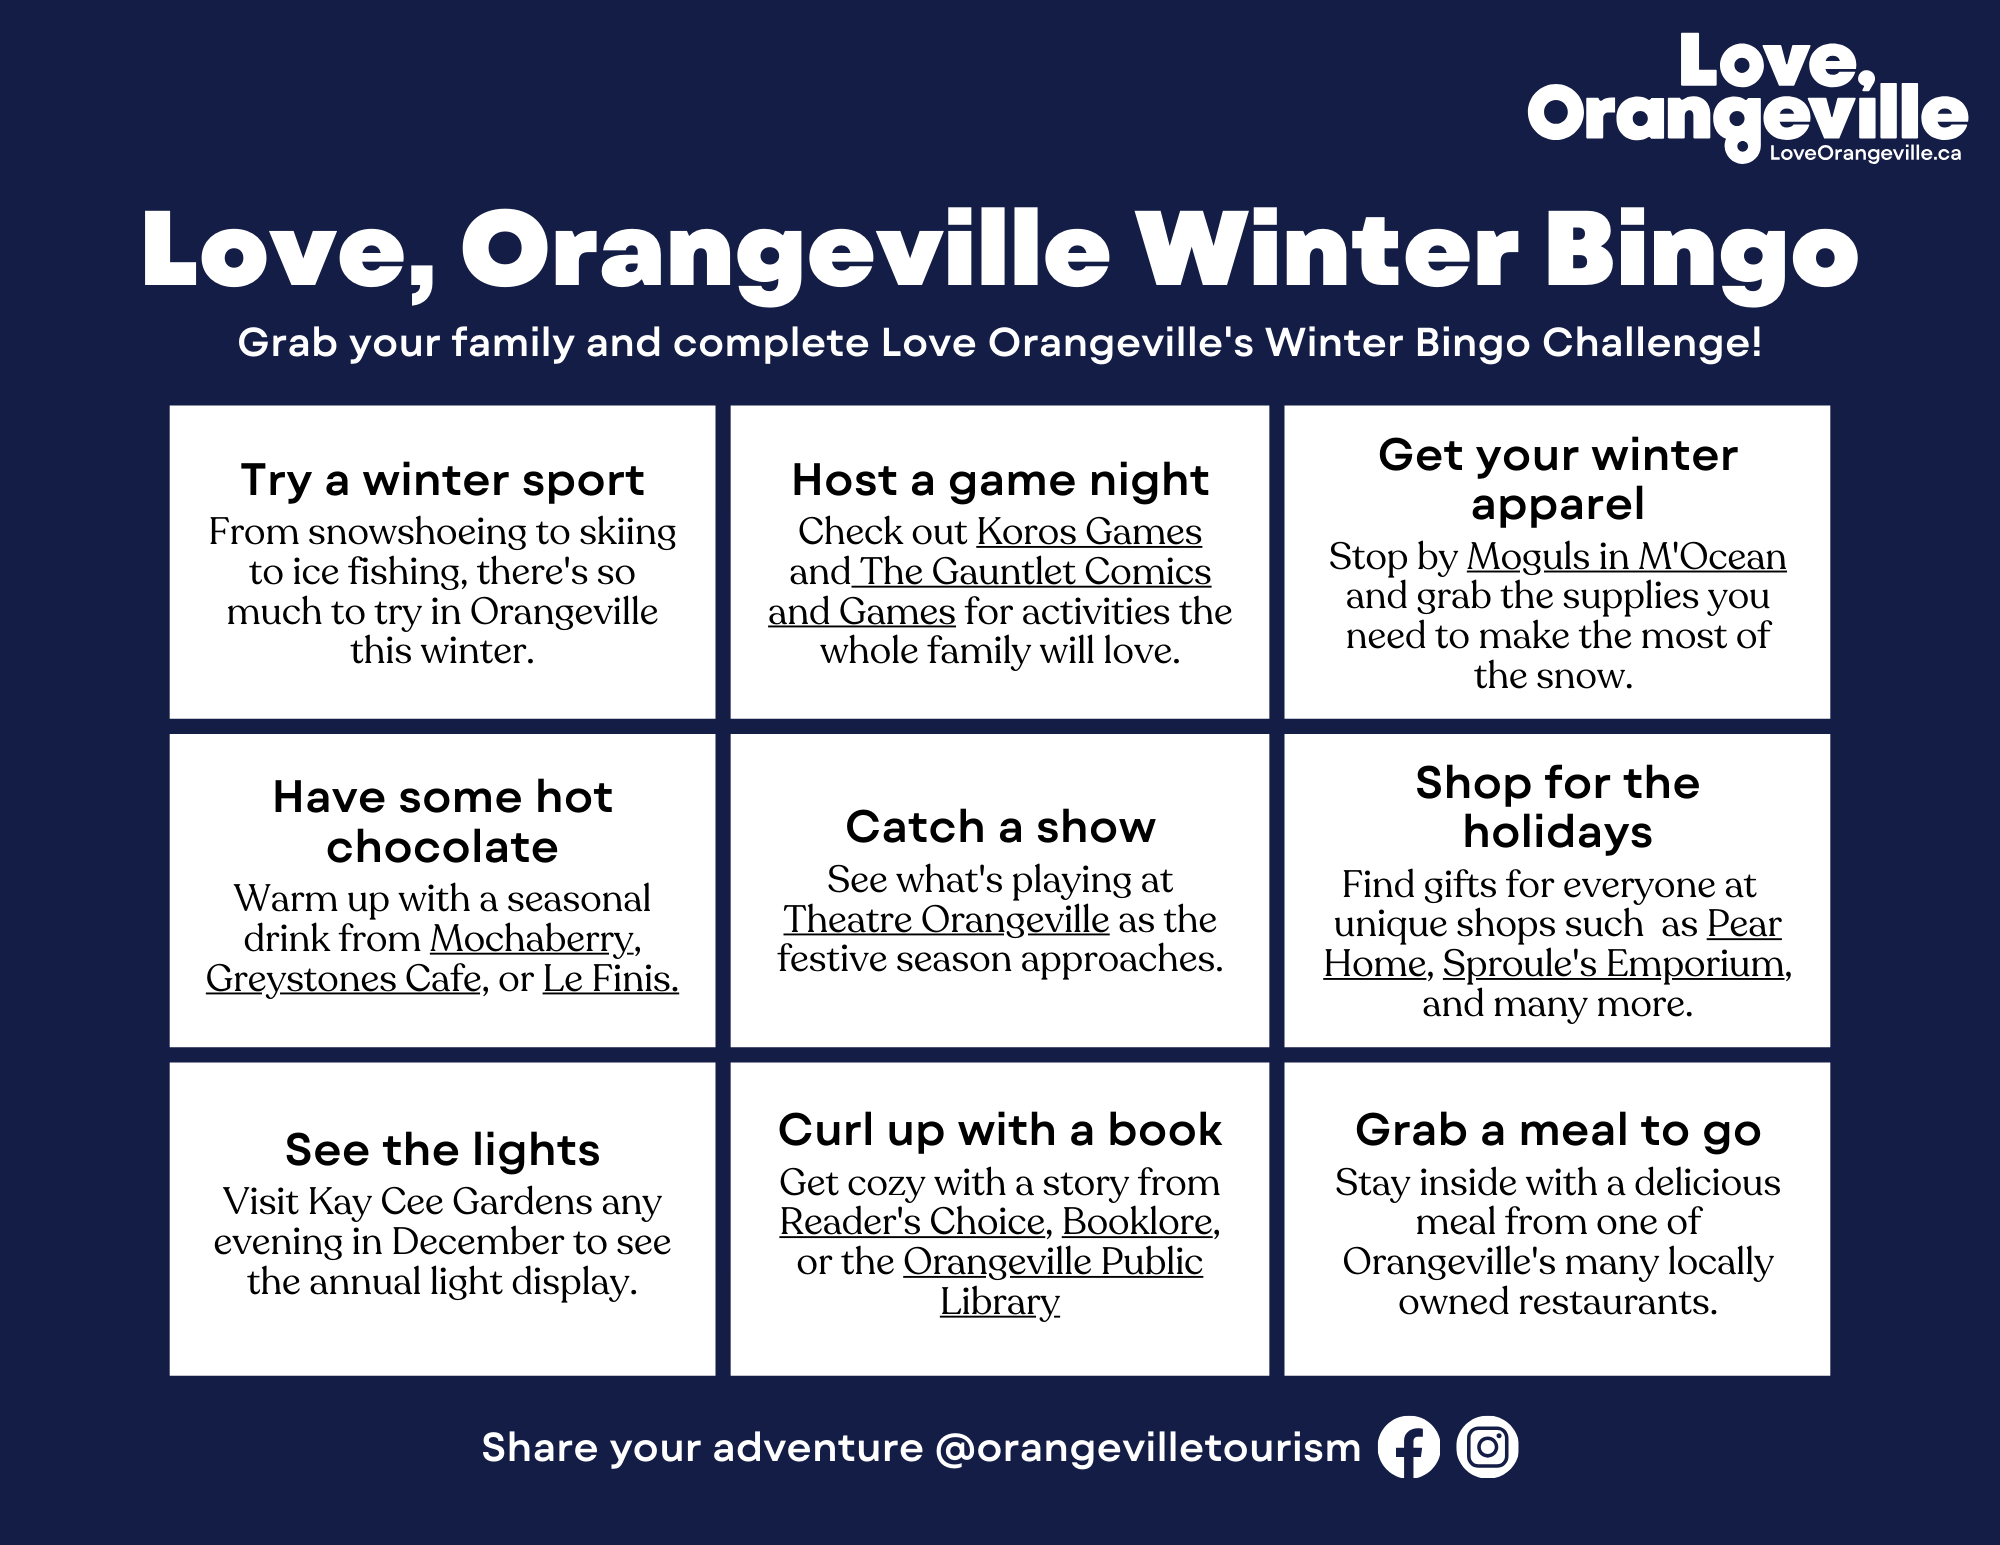 Image of a winter themed bingo card